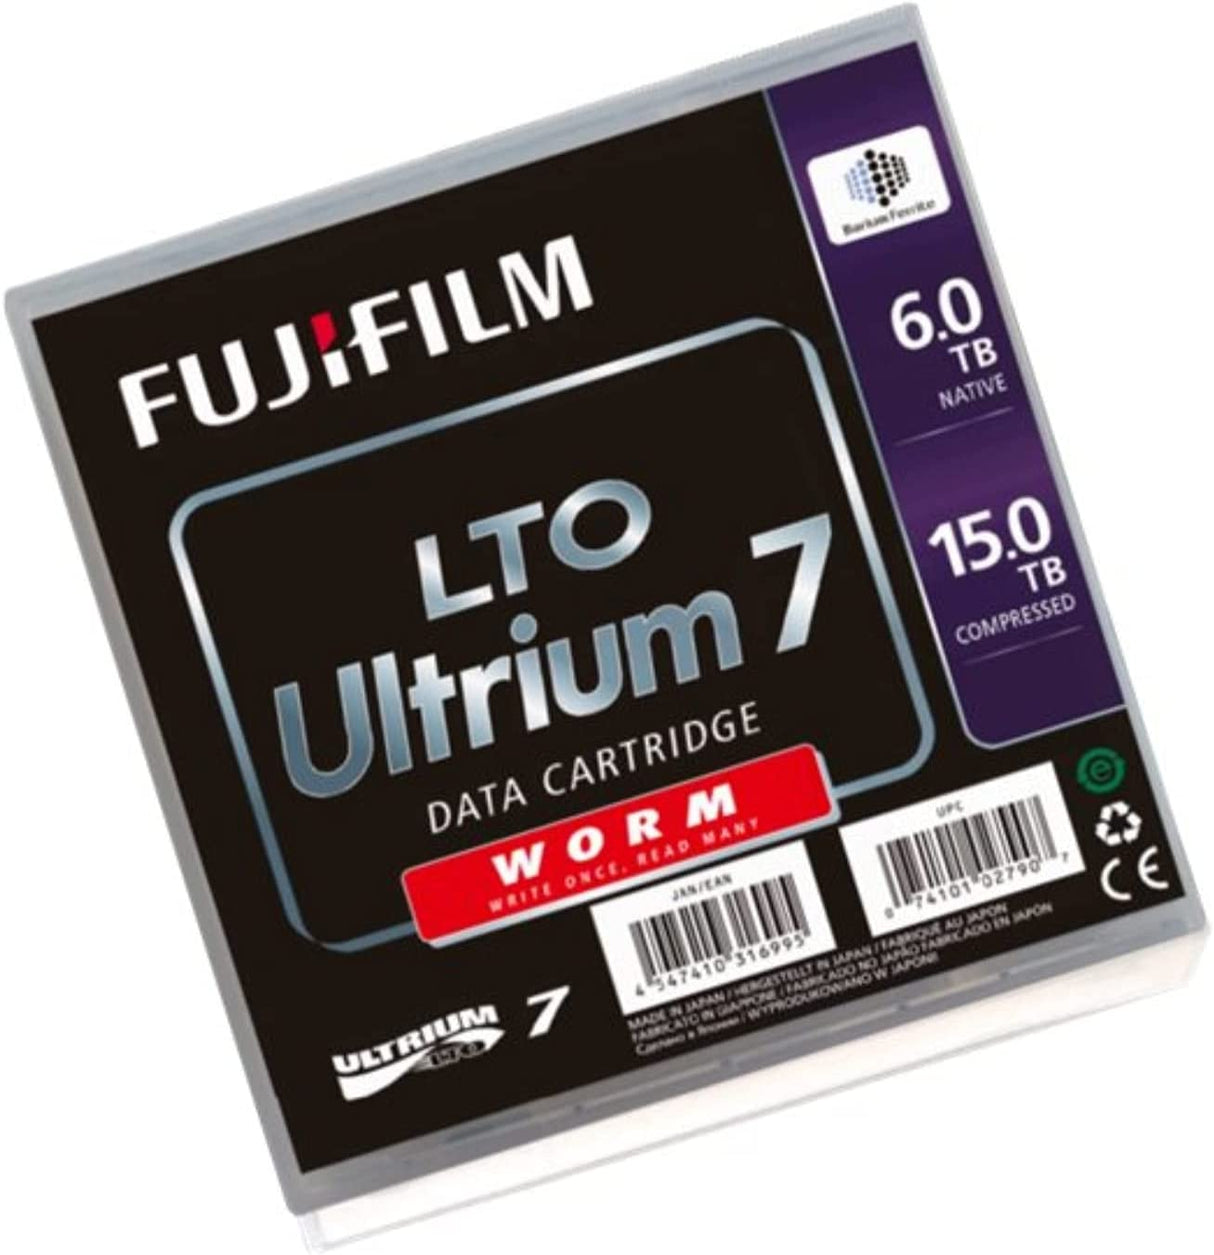 Fuji Brand Lto-7 Worm Barcode